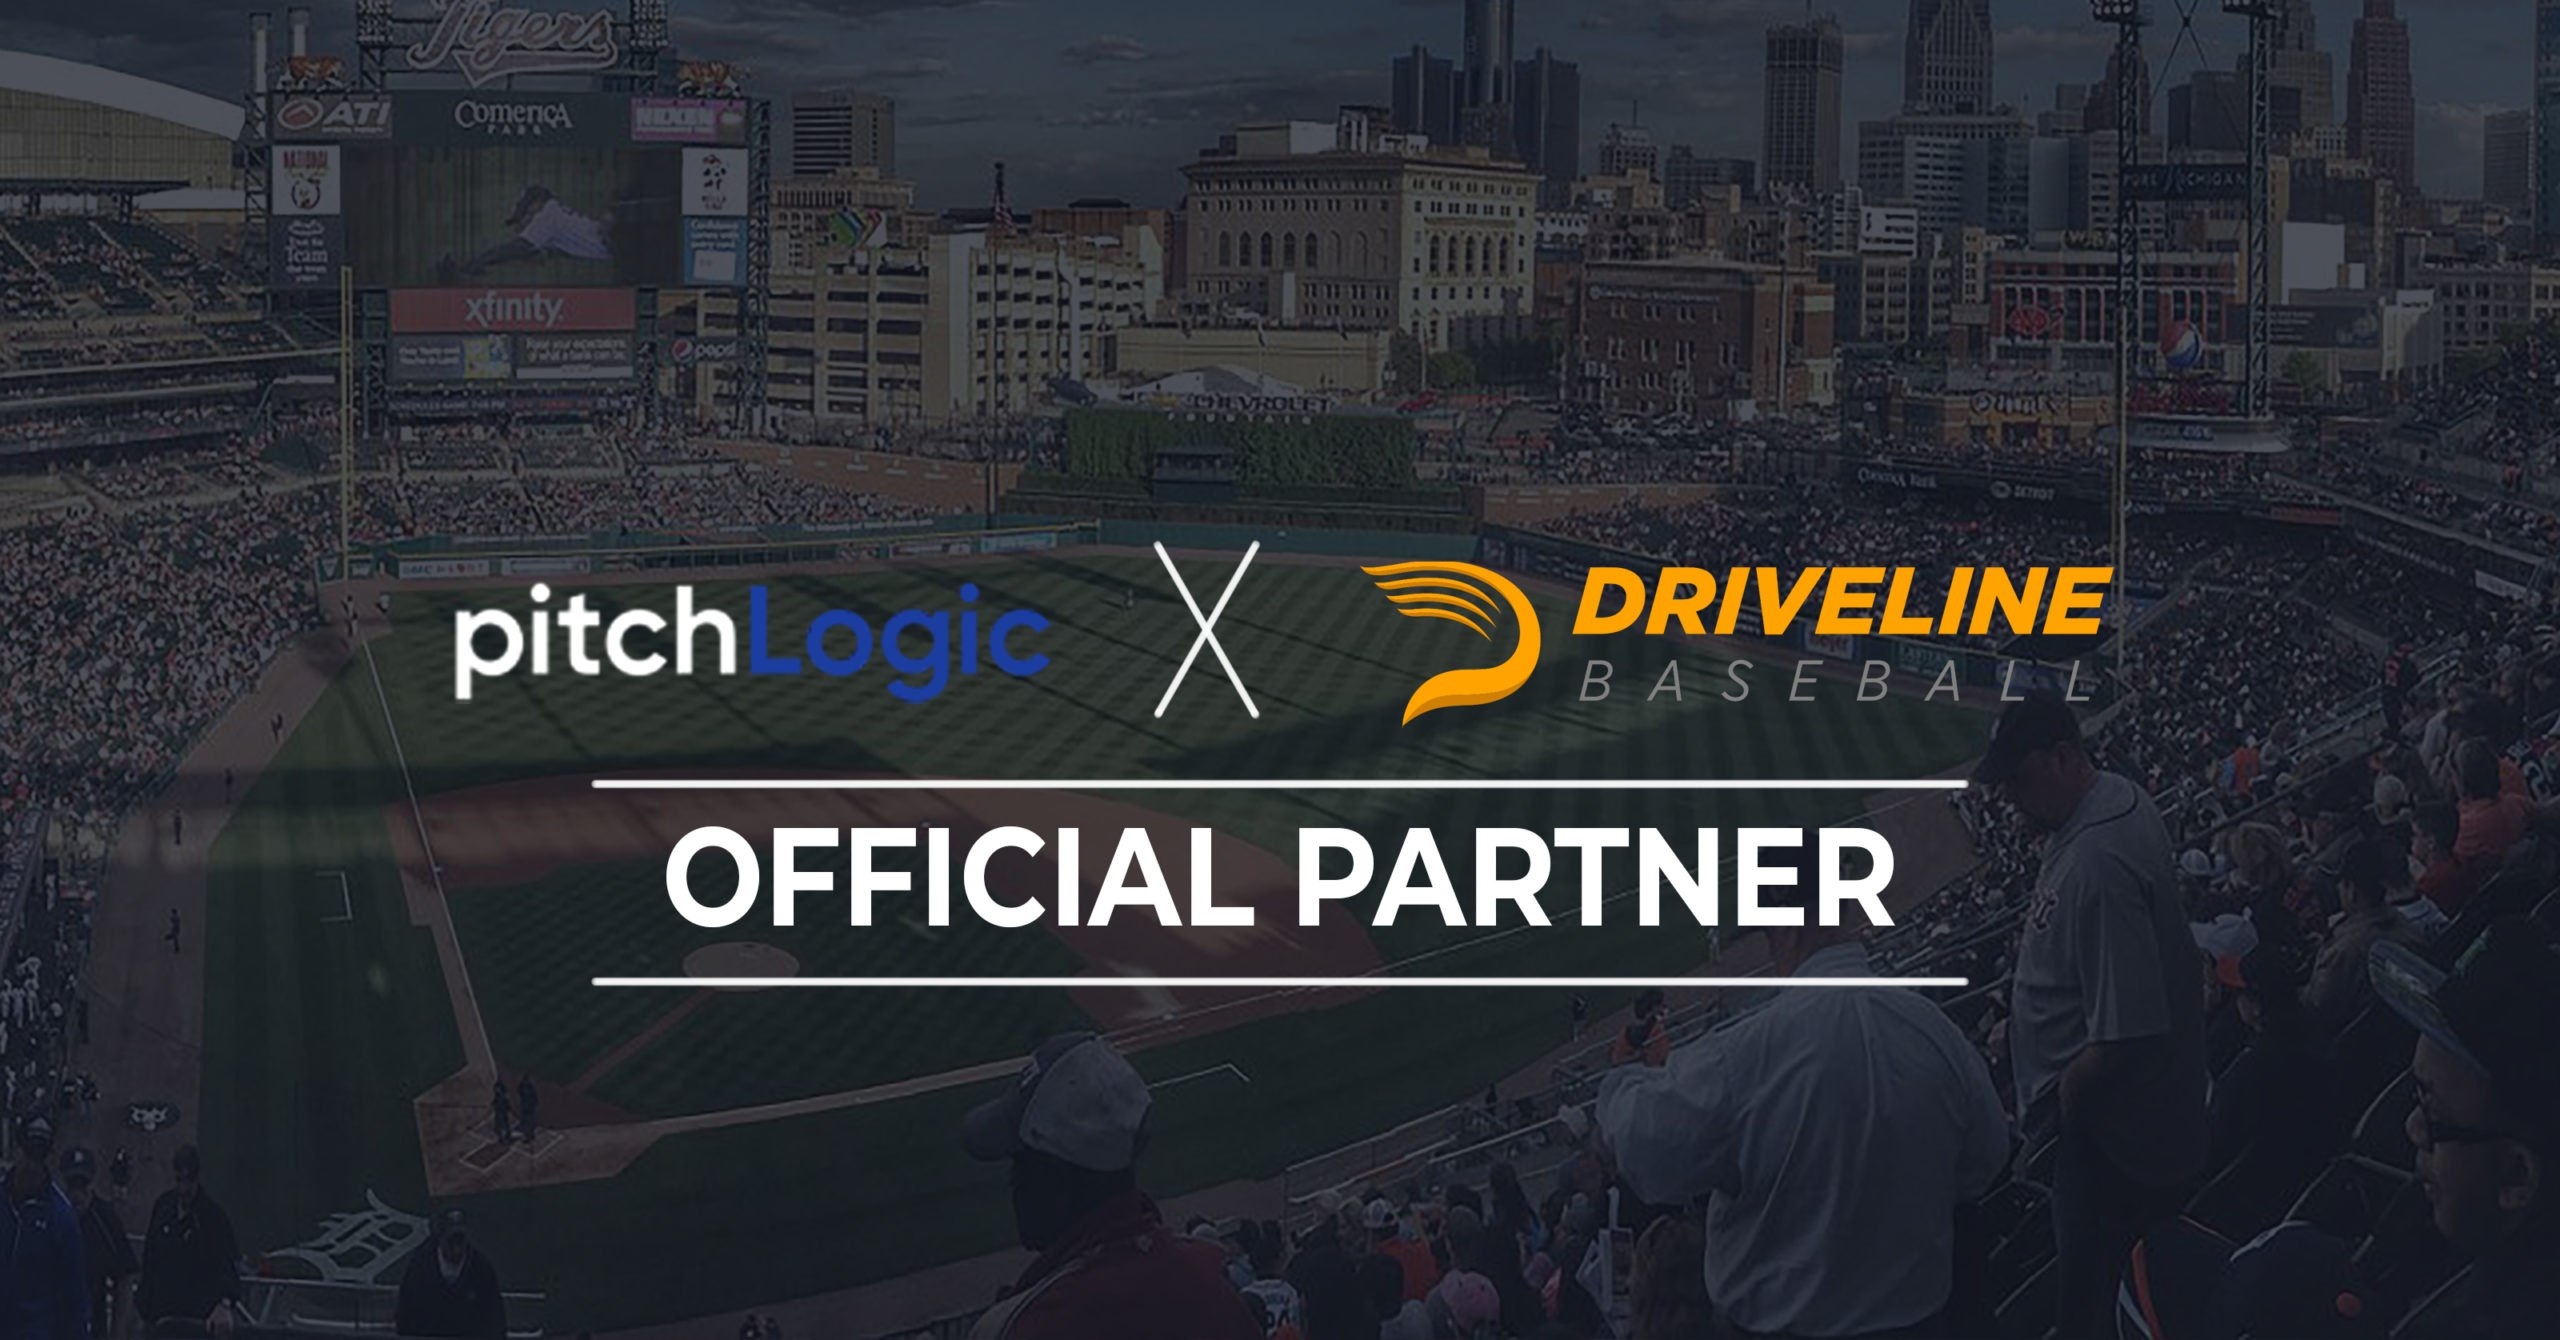 pitchlogic driveline partnership